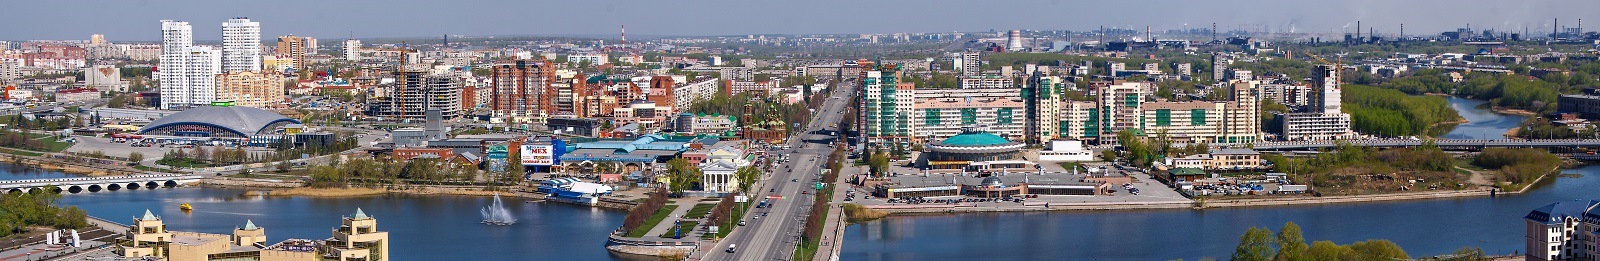 Панорама города Челябинск №1